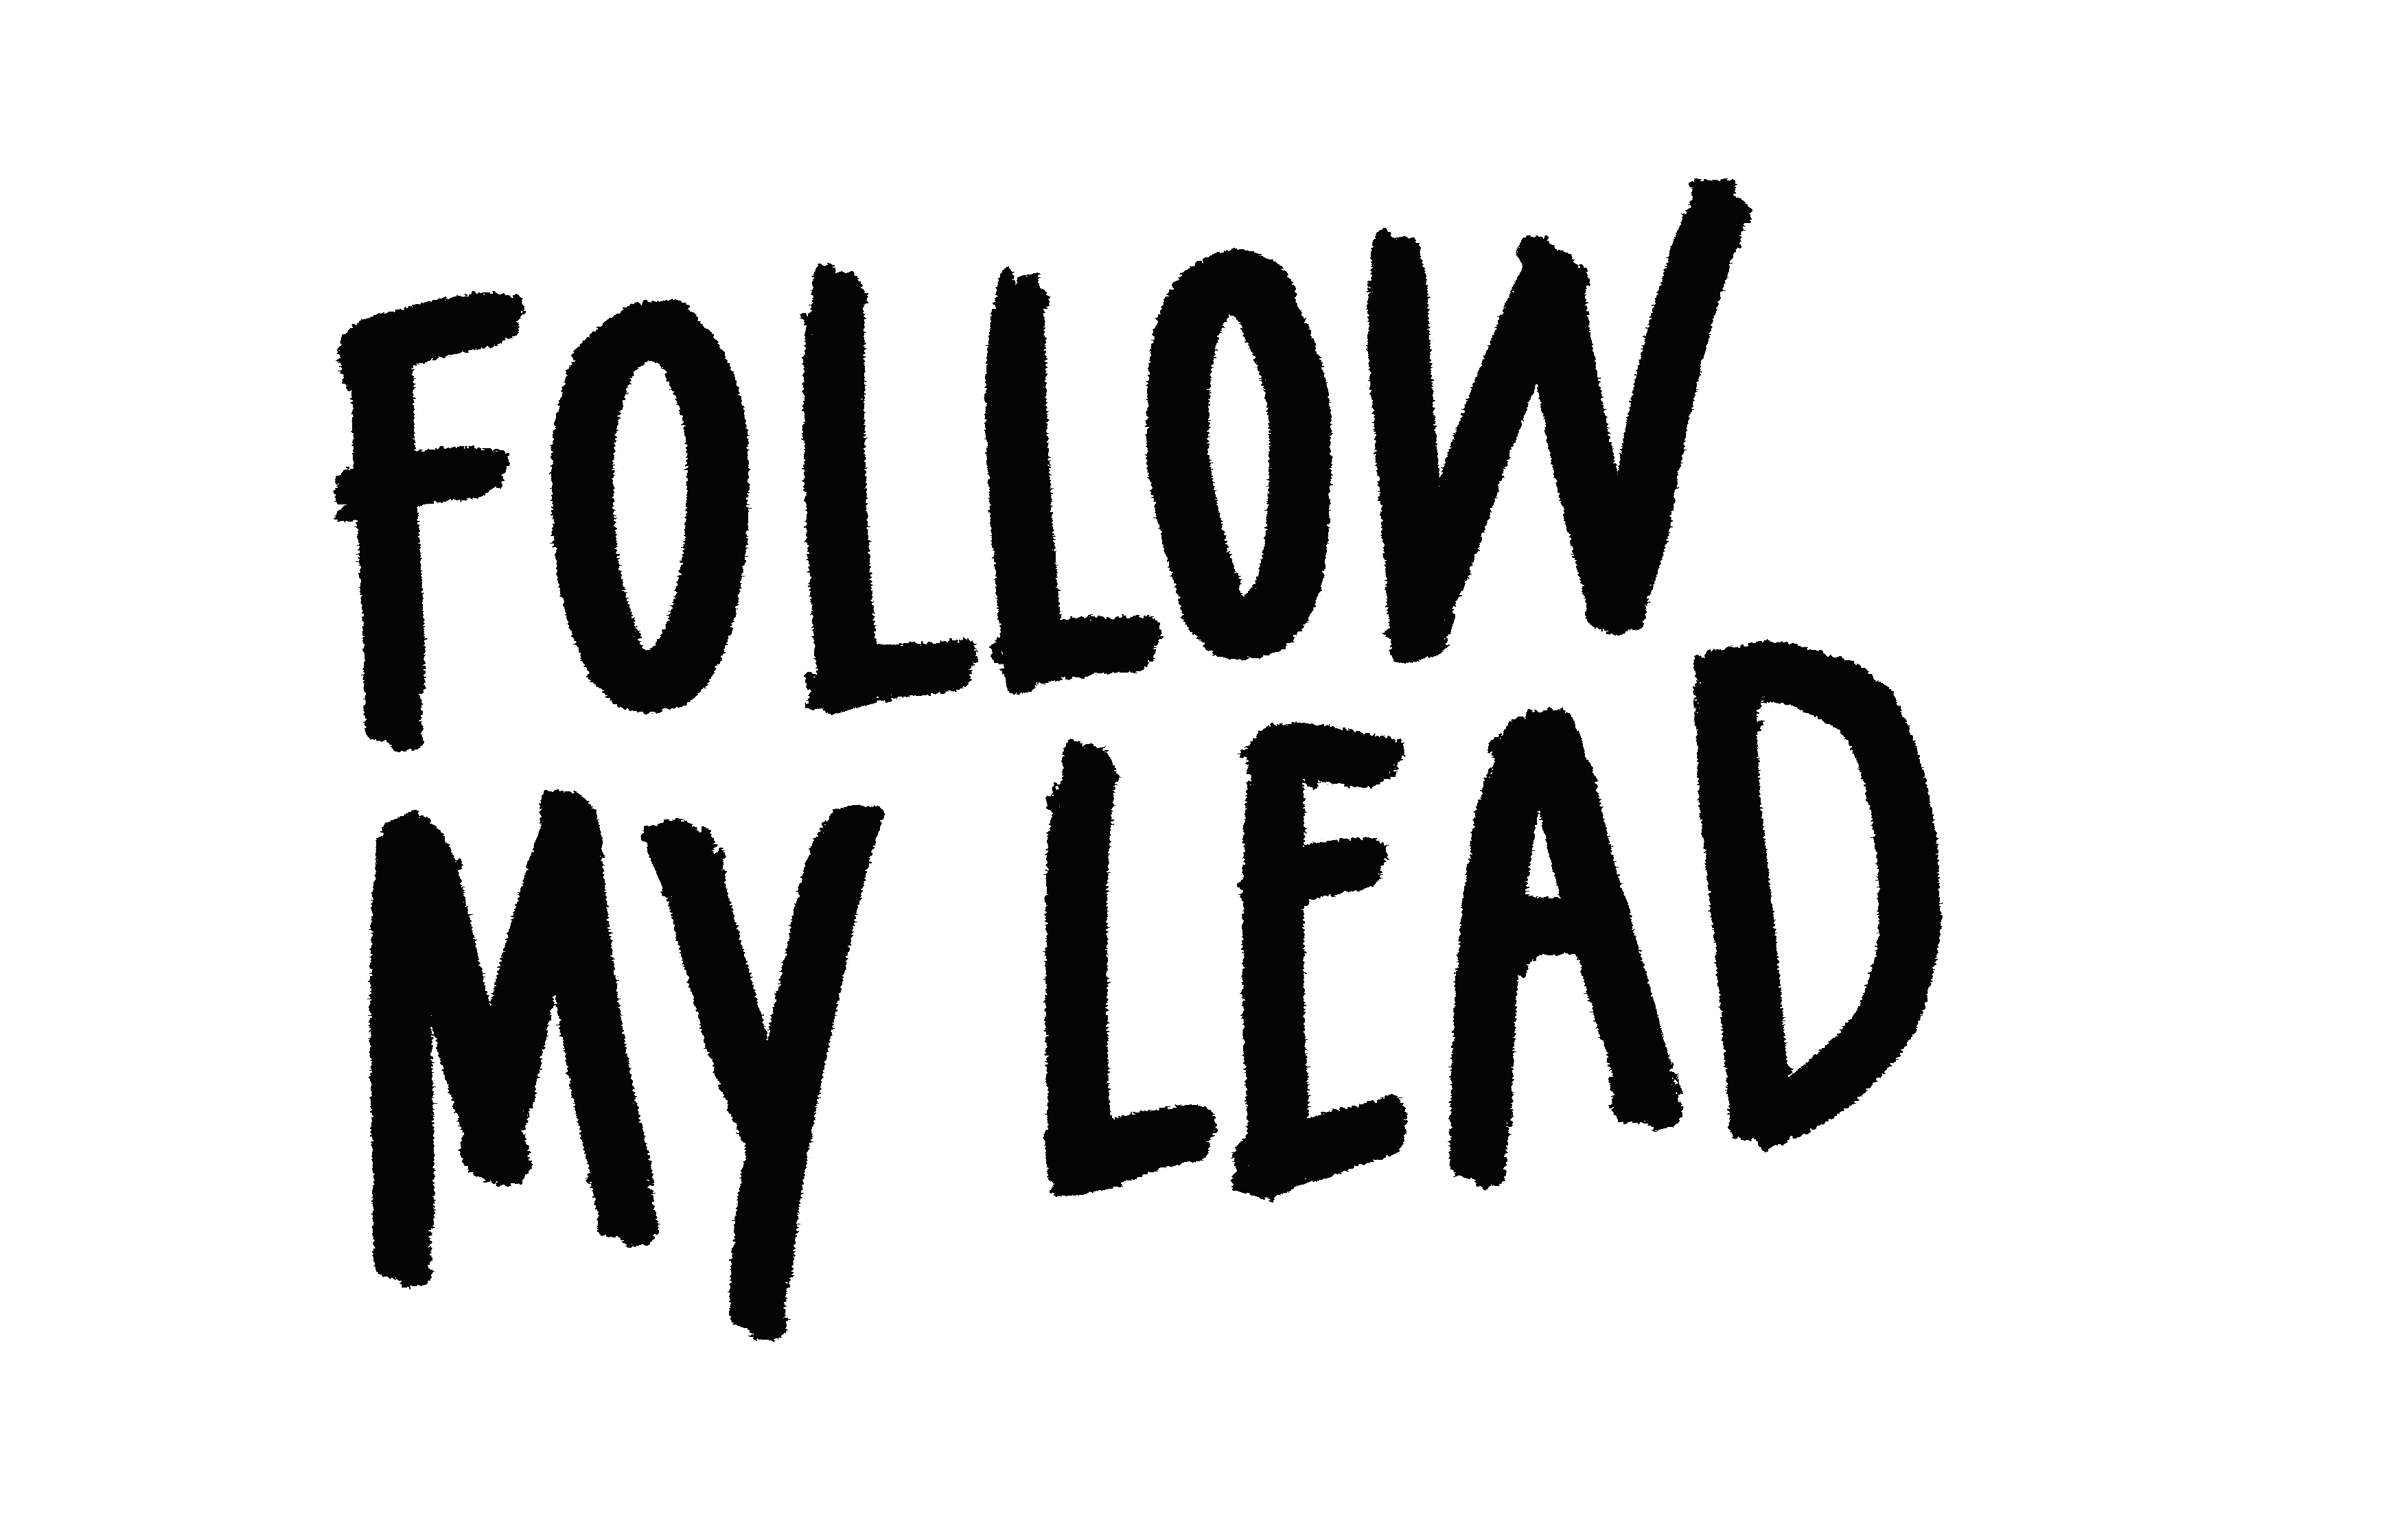 FollowMyLead_blk_logo